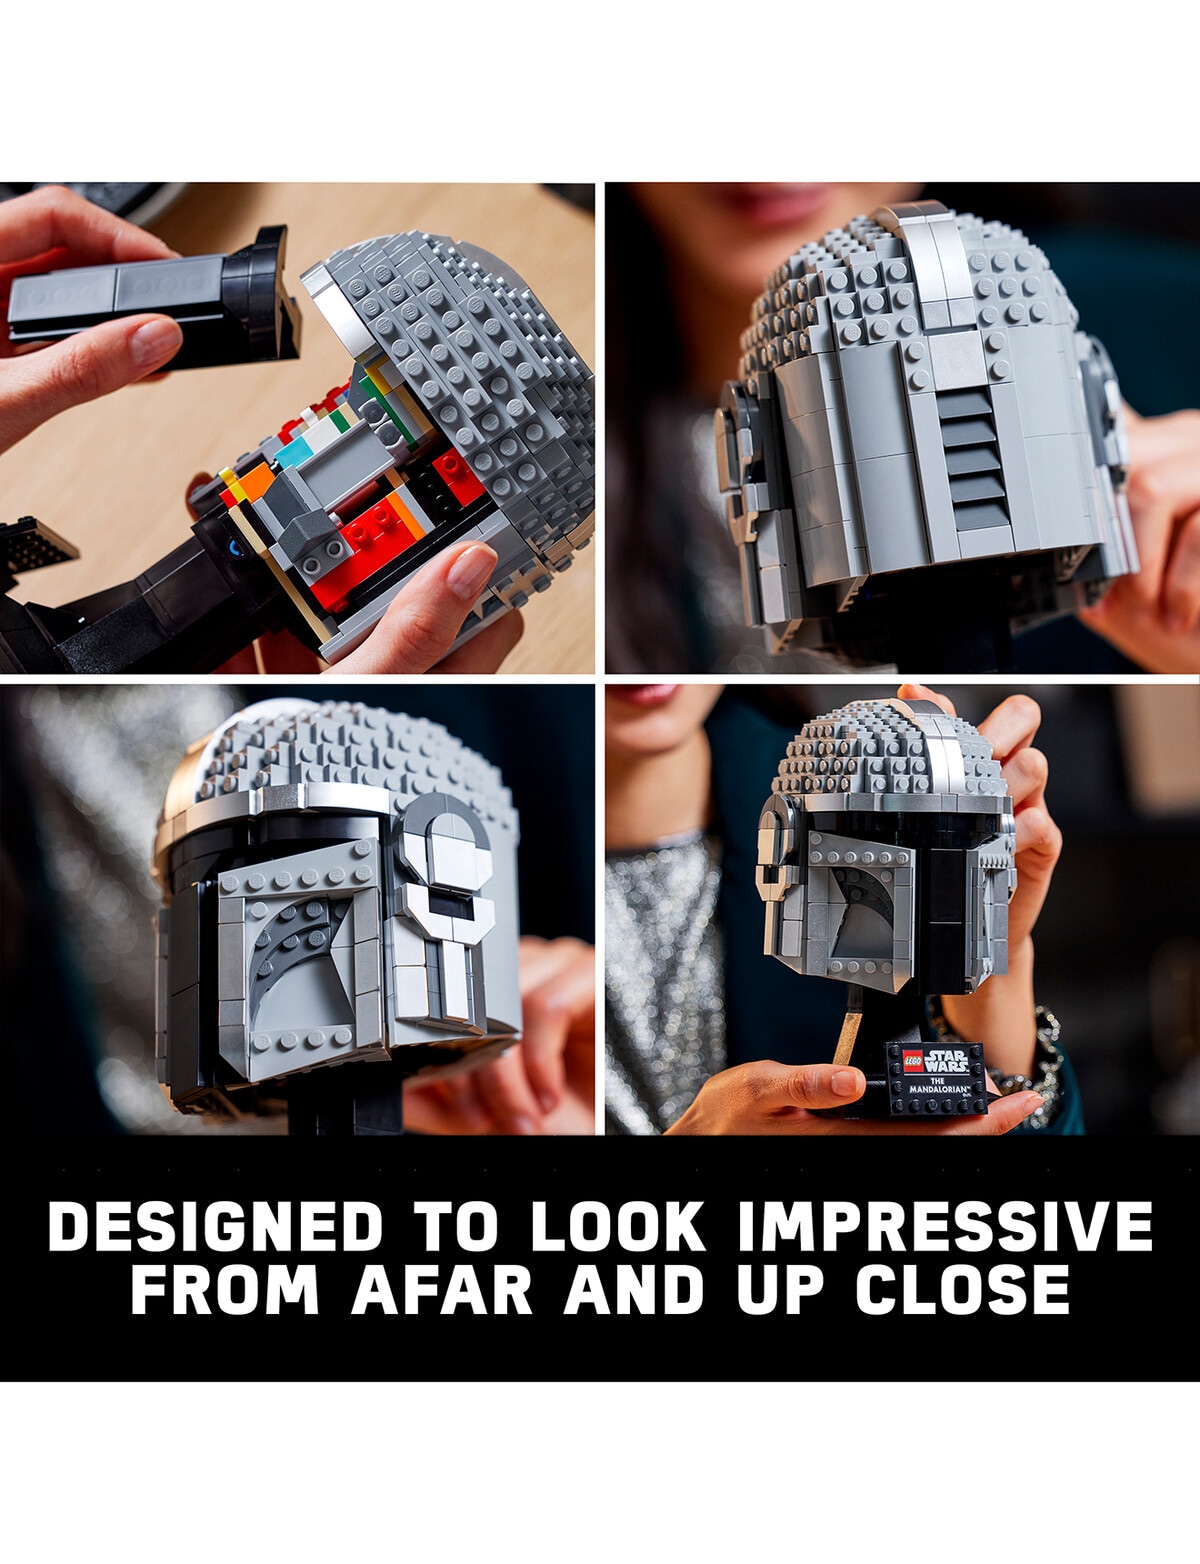 LEGO Star Wars The Mandalorian Helmet, 75328 - Lego & Construction